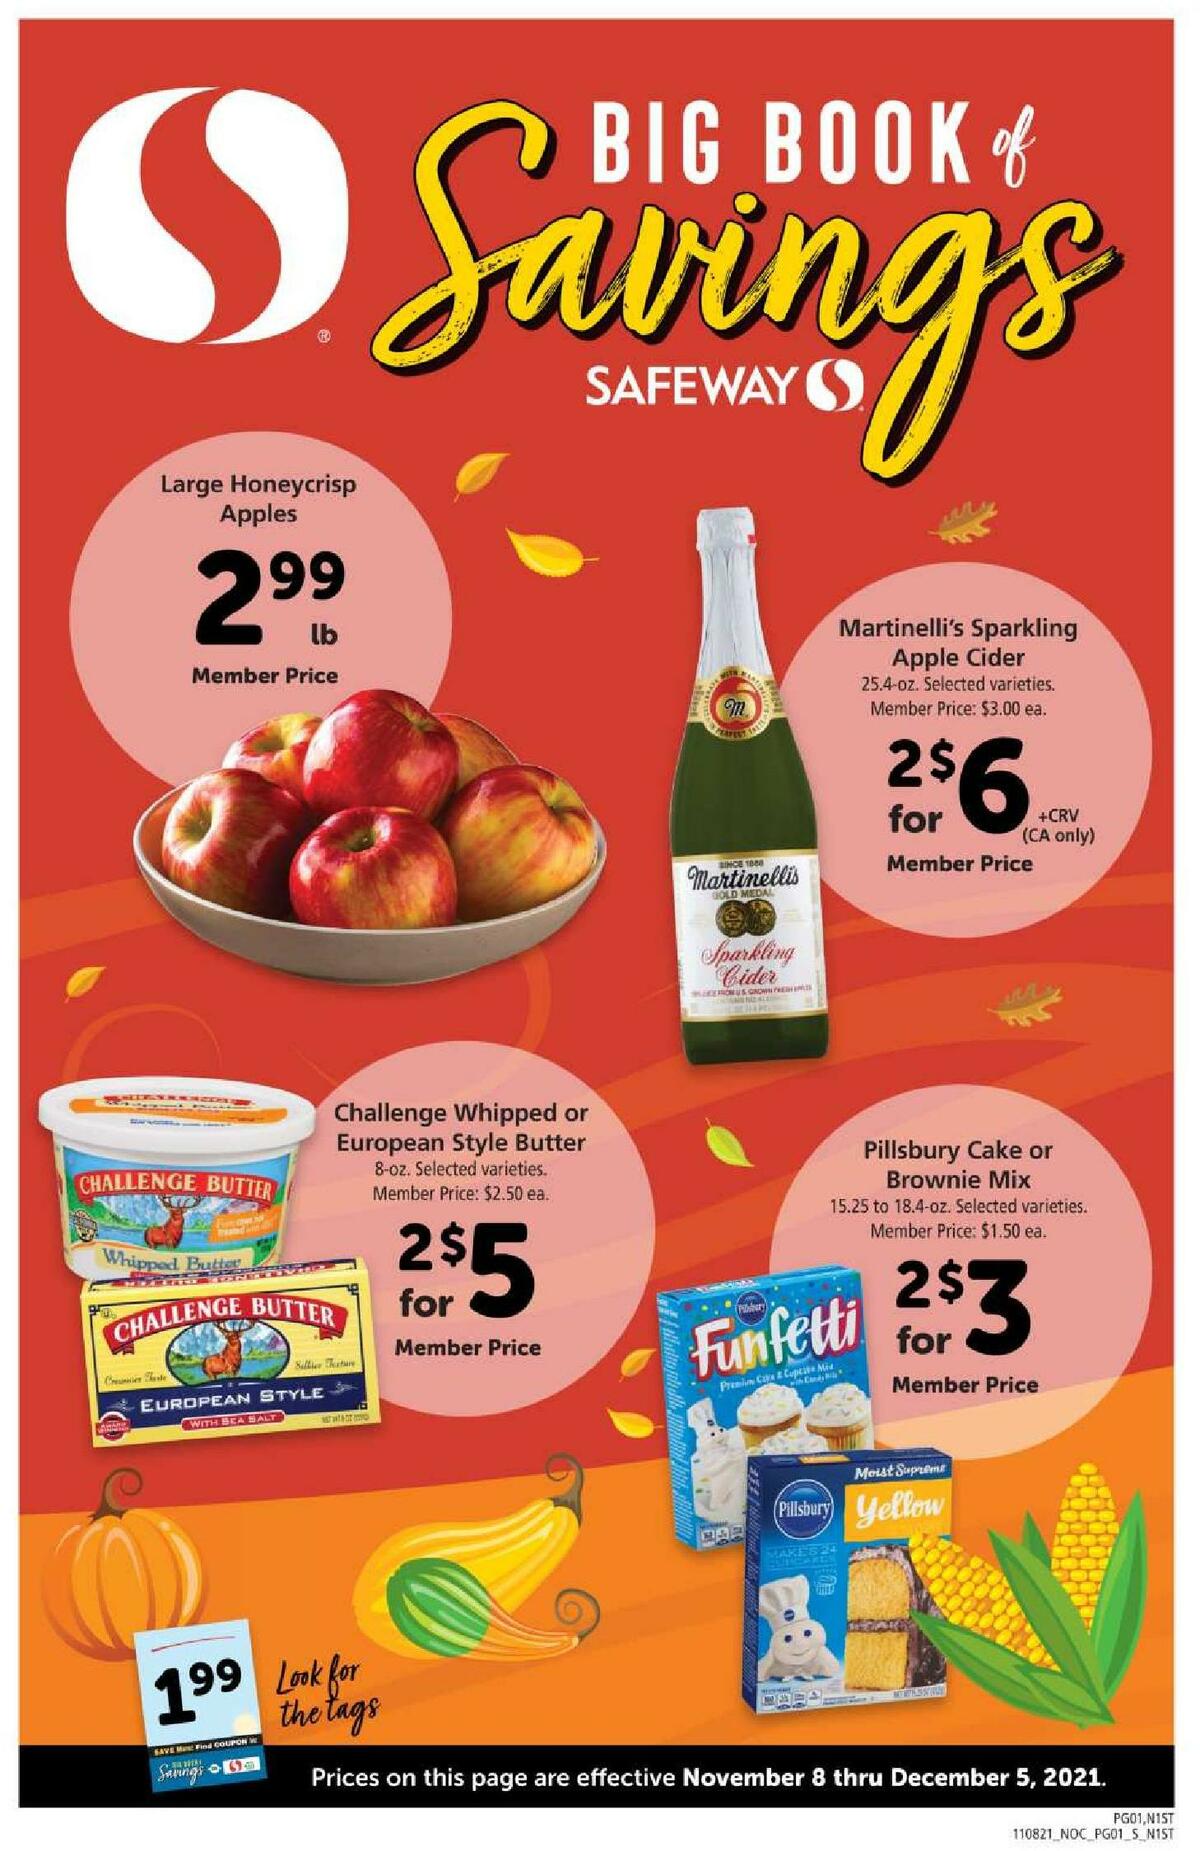 Safeway Big Book of Savings Weekly Ad from November 8